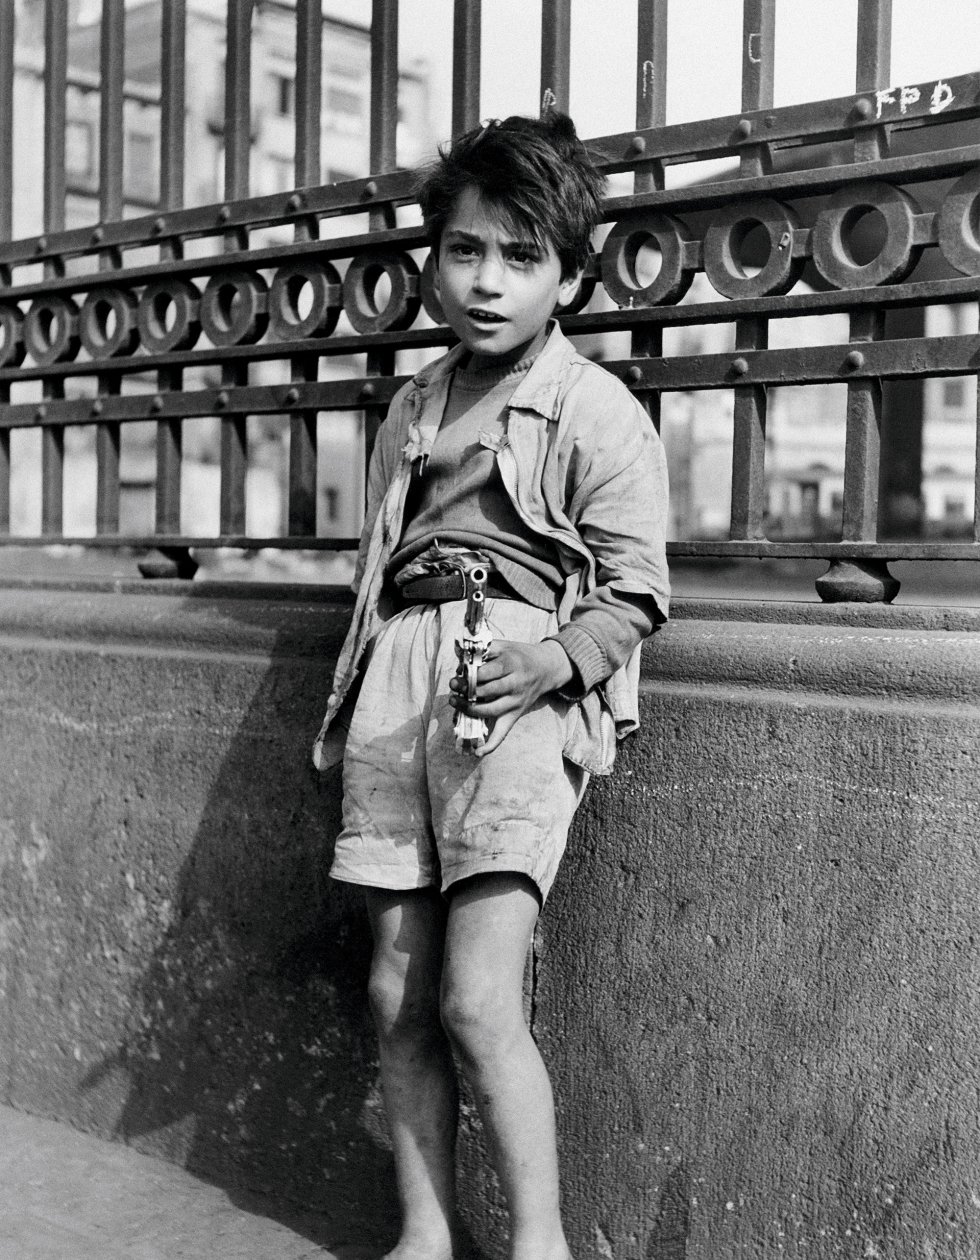 'Barcelona, (criança com pistola)', 1959